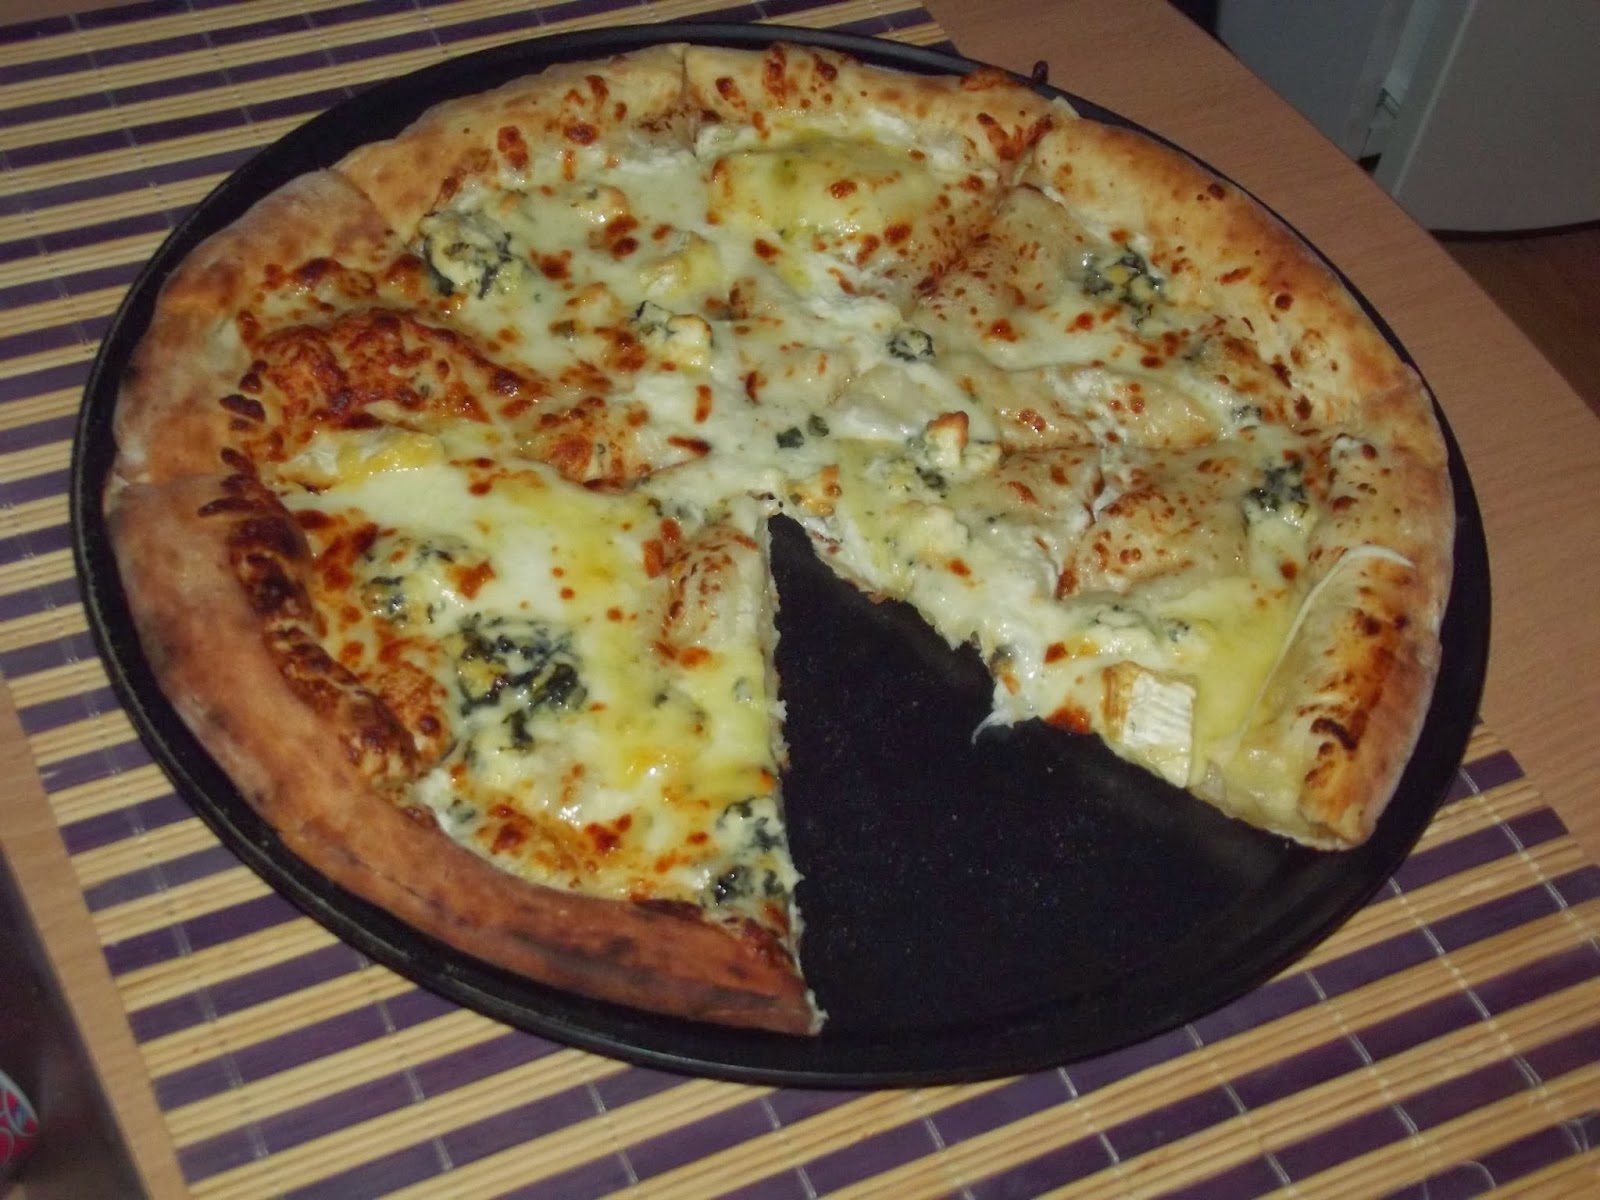 Quattro Formaggi Pizza (Four Cheese) - Inside The Rustic Kitchen